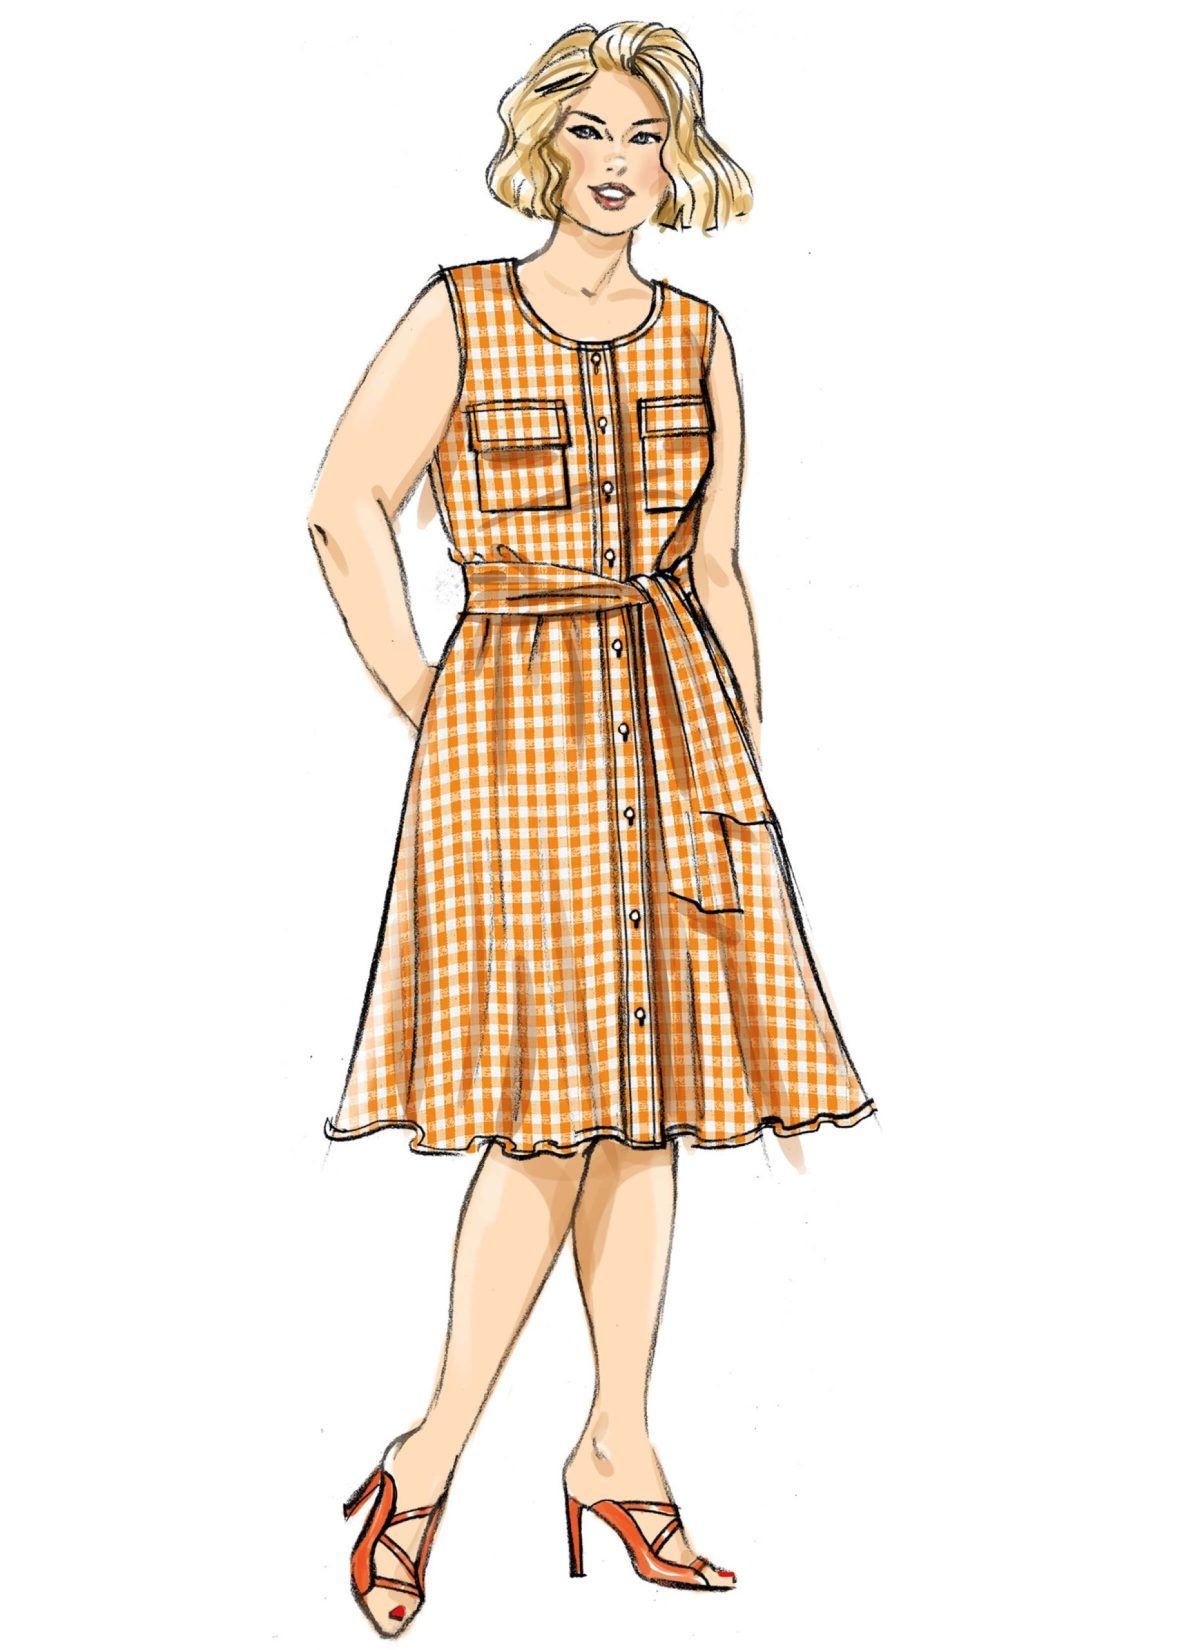 Butterick Sewing Pattern B6891 Women's Dress, Jumpsuit and Sash